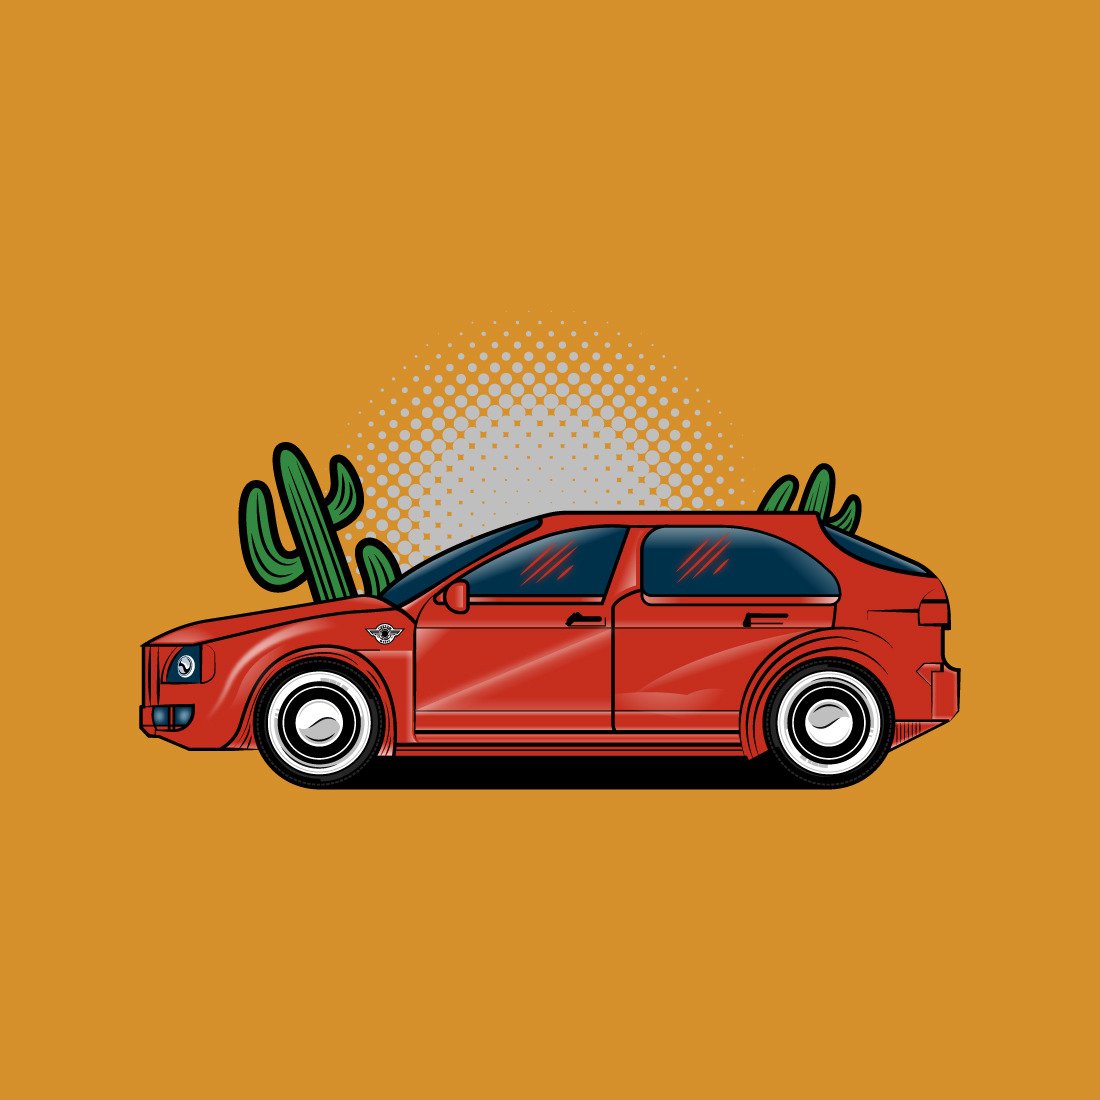 Car Digital Graphics cover image.